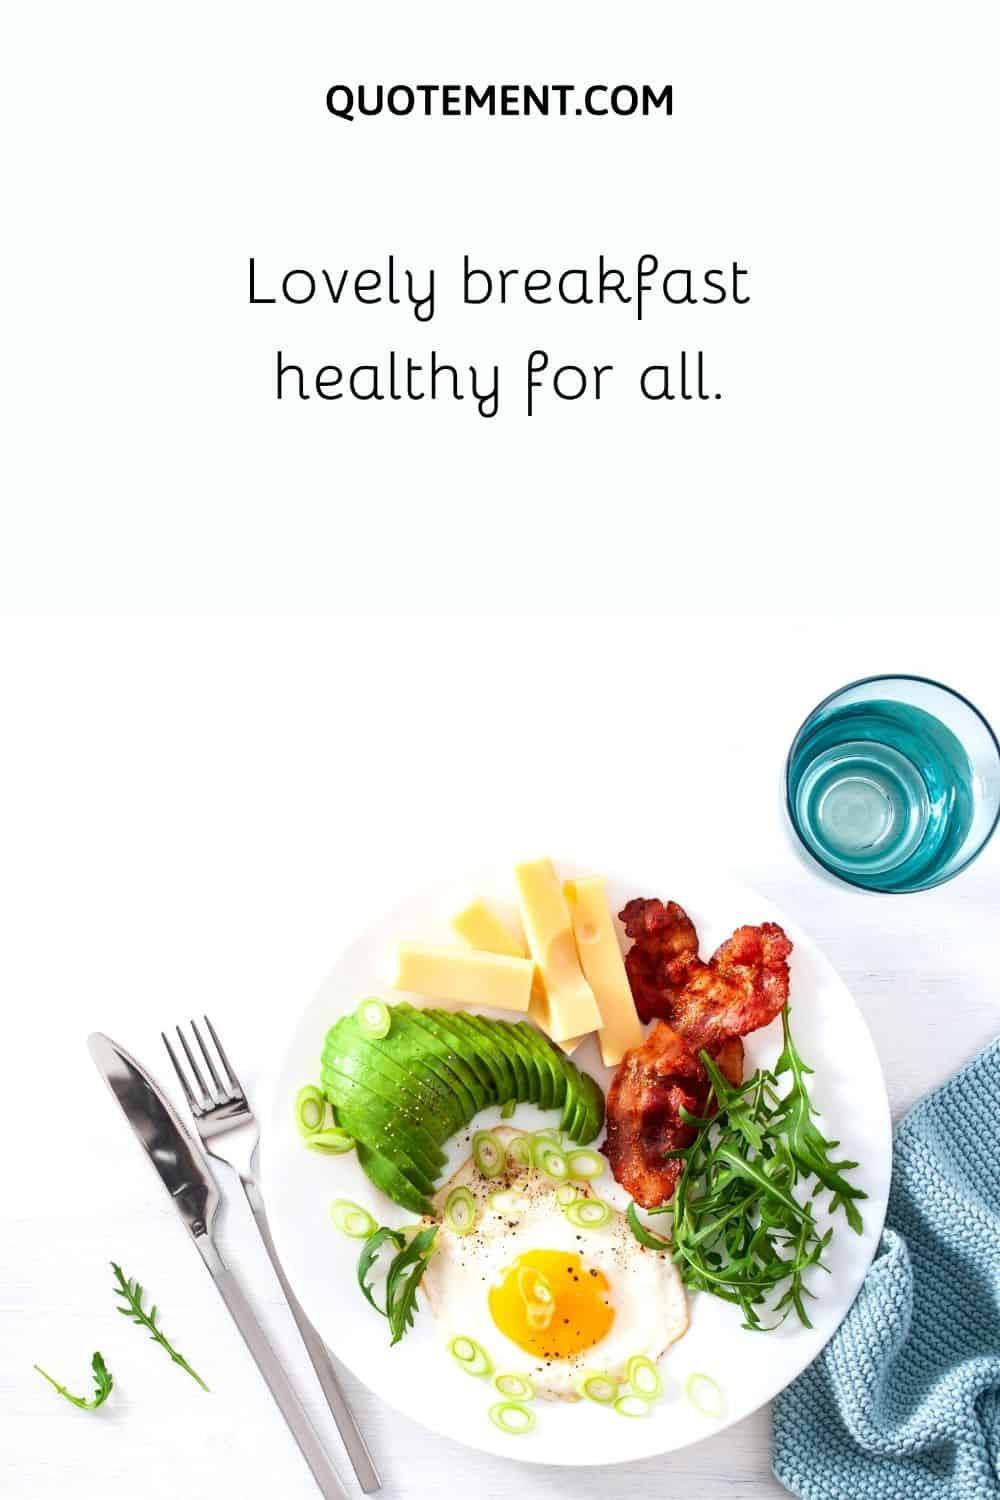 Lovely breakfast healthy for all.